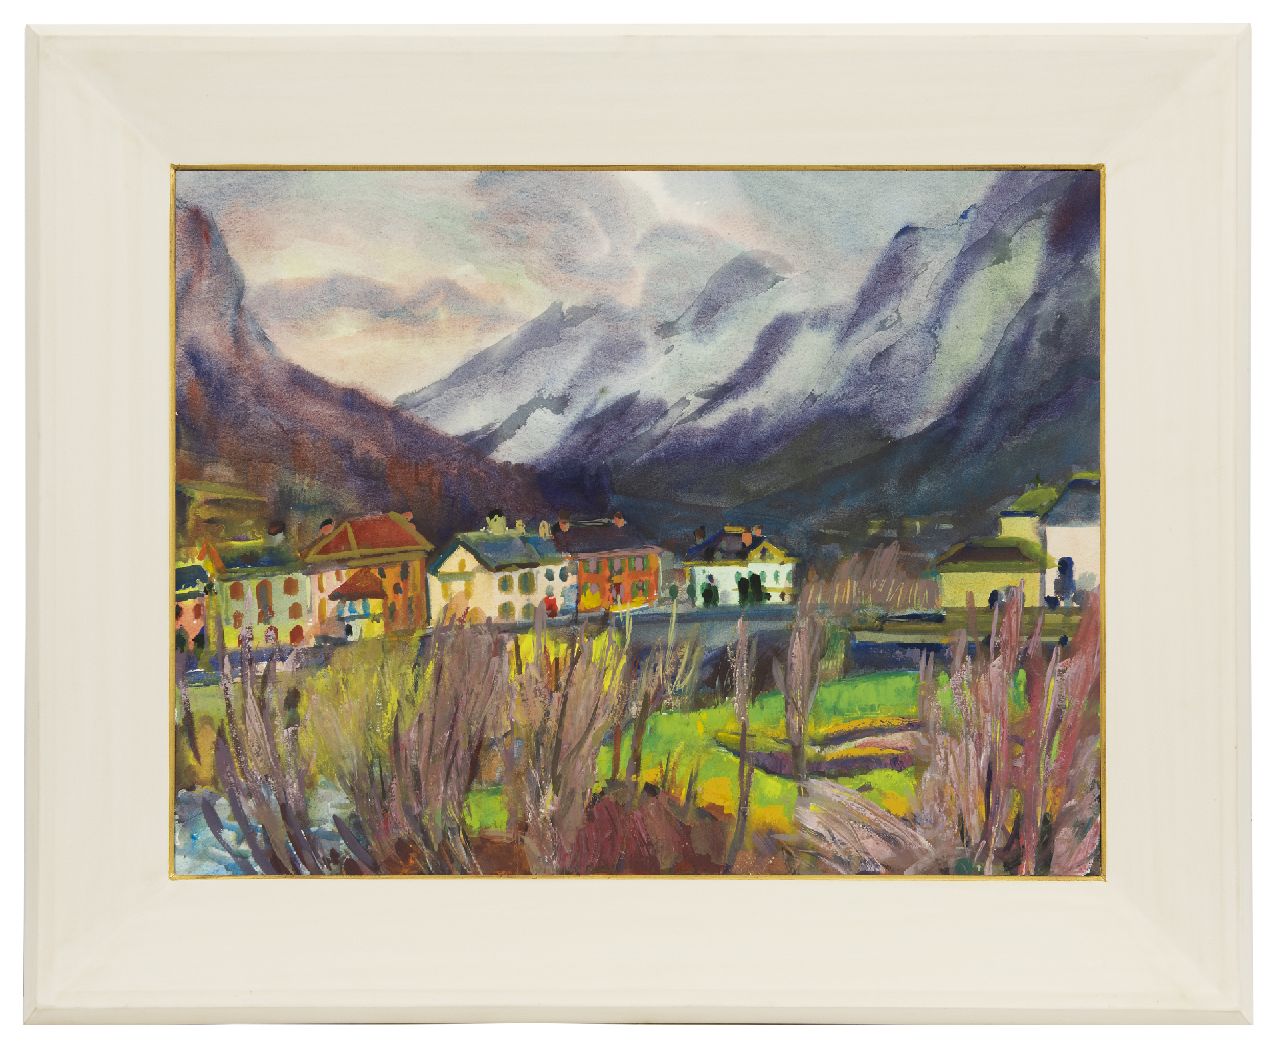 Vries J. de | Jannes de Vries, Bignasco in the Maggia valley, Italy, watercolour and gouache on paper 55.8 x 73.0 cm